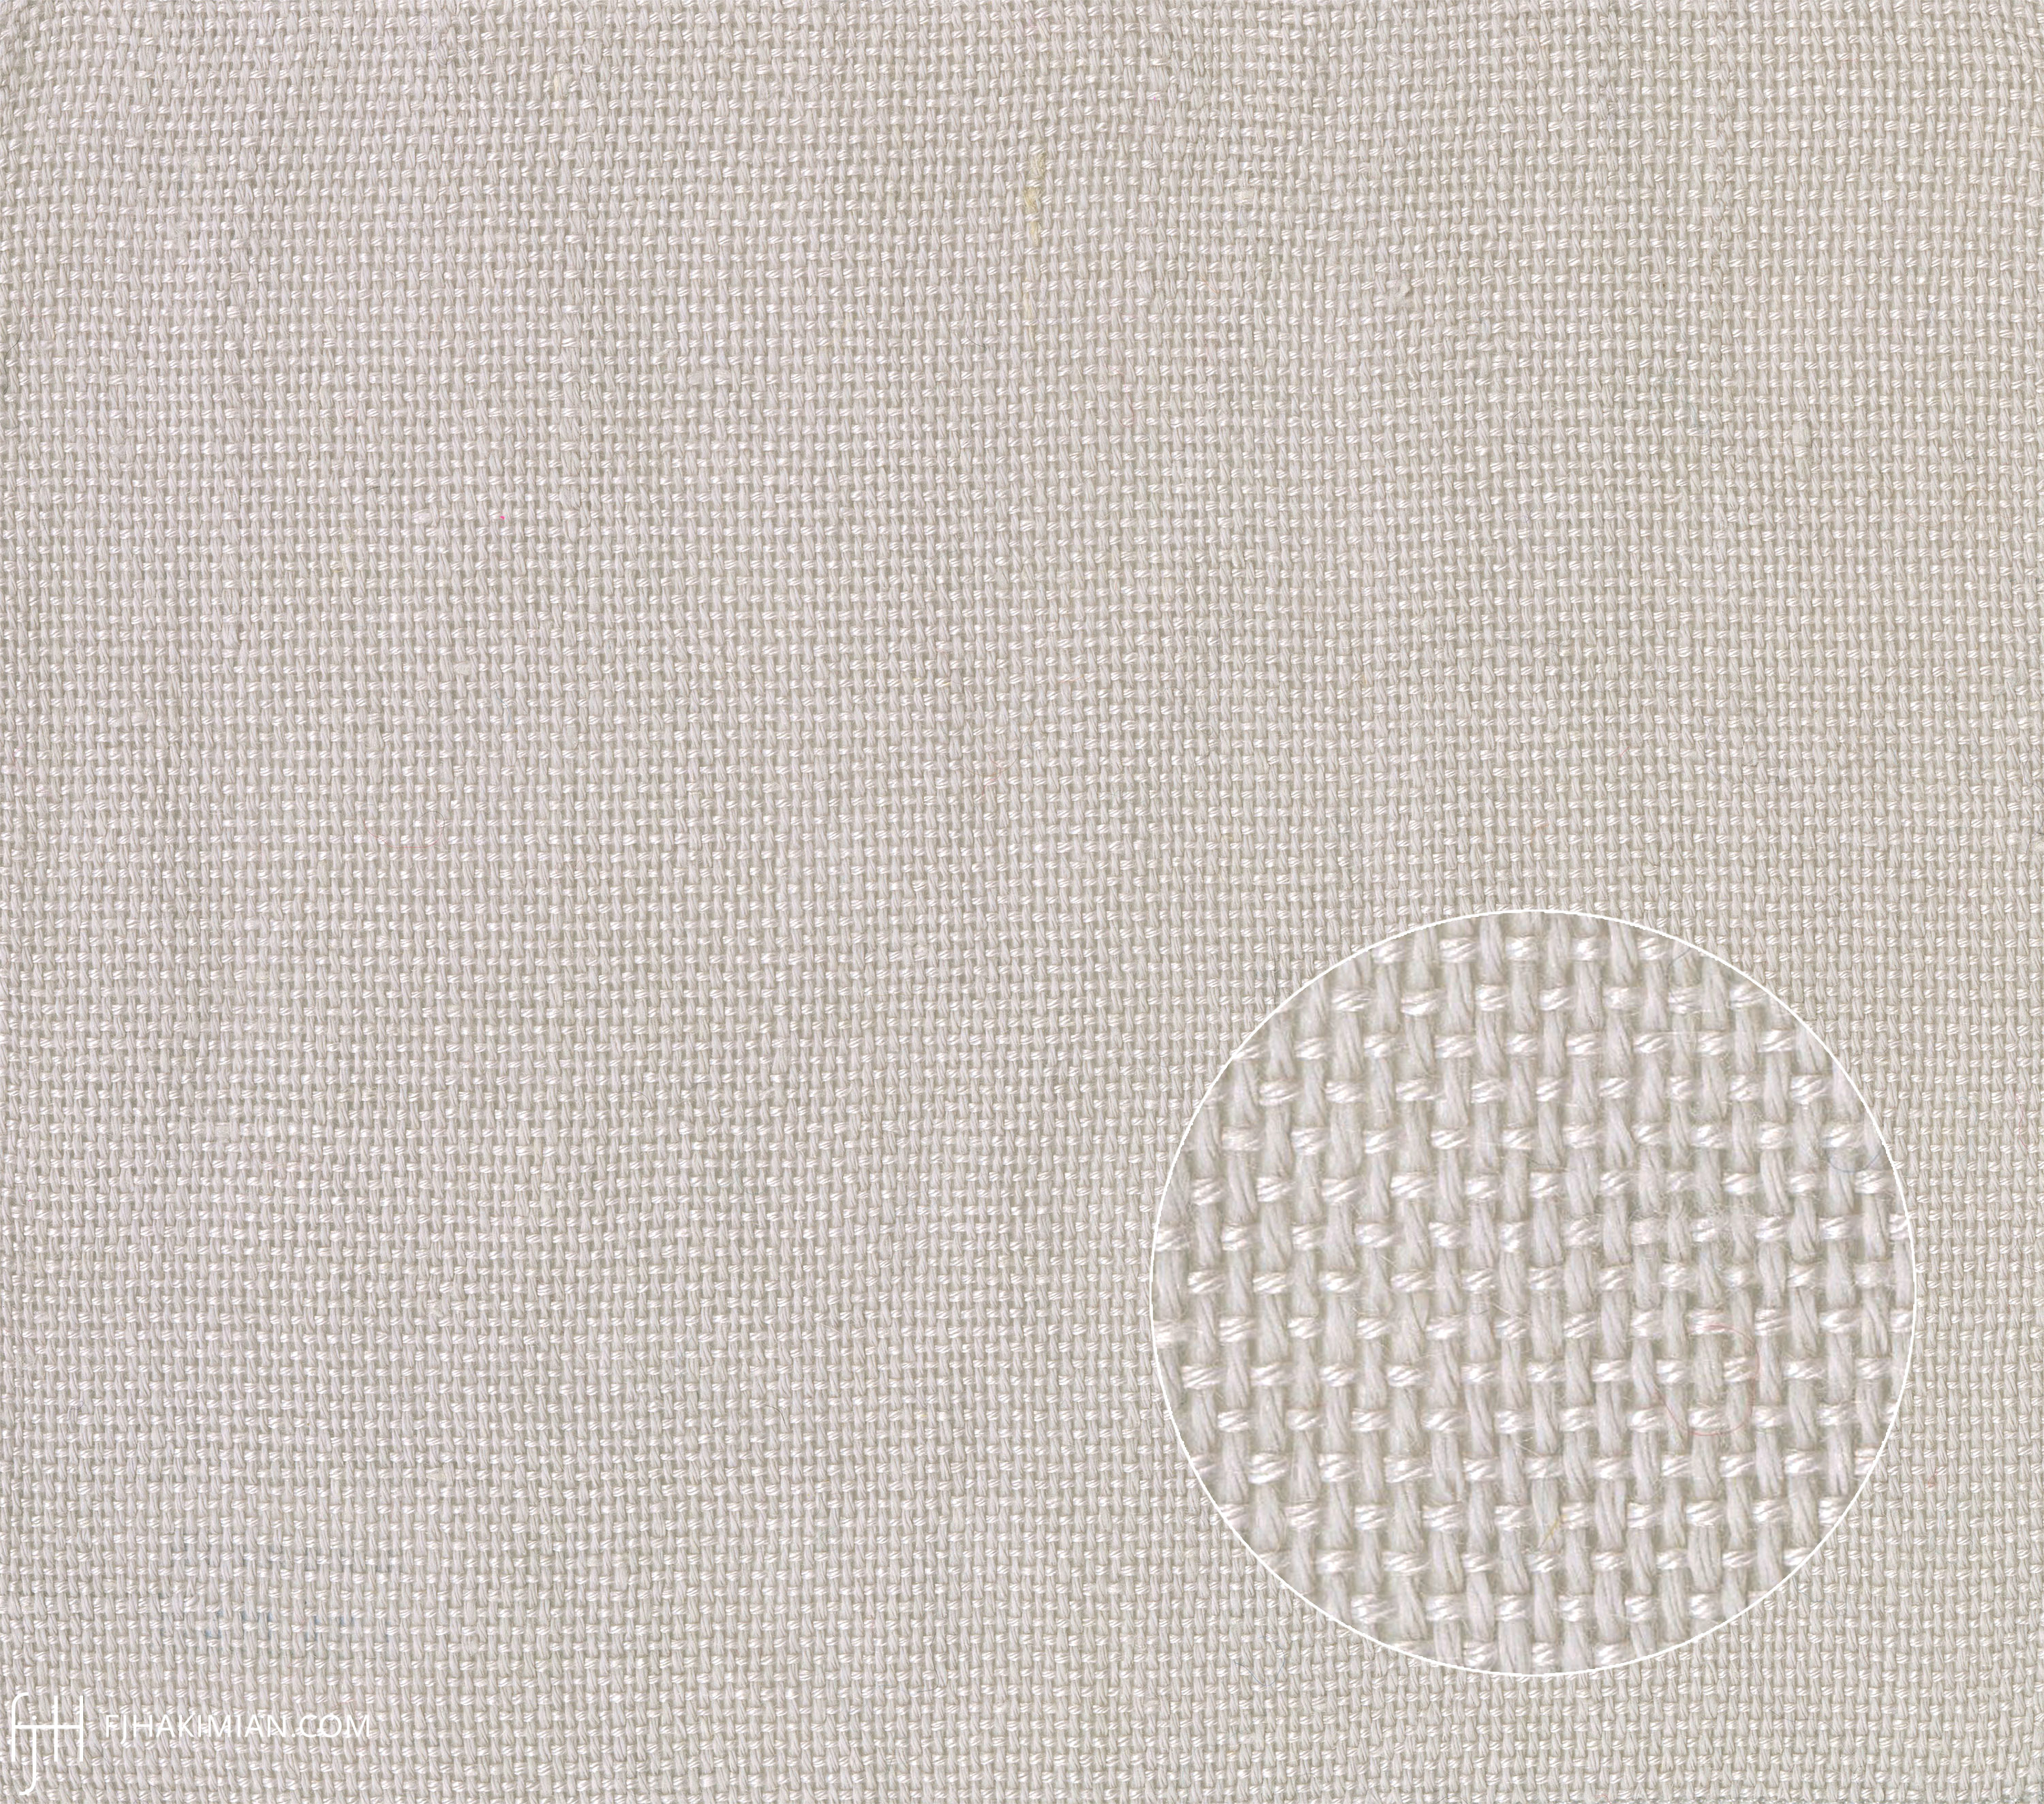 AB-LTLMLM Upholstery Fabric | FJ Hakimian Carpet Gallery, New York 